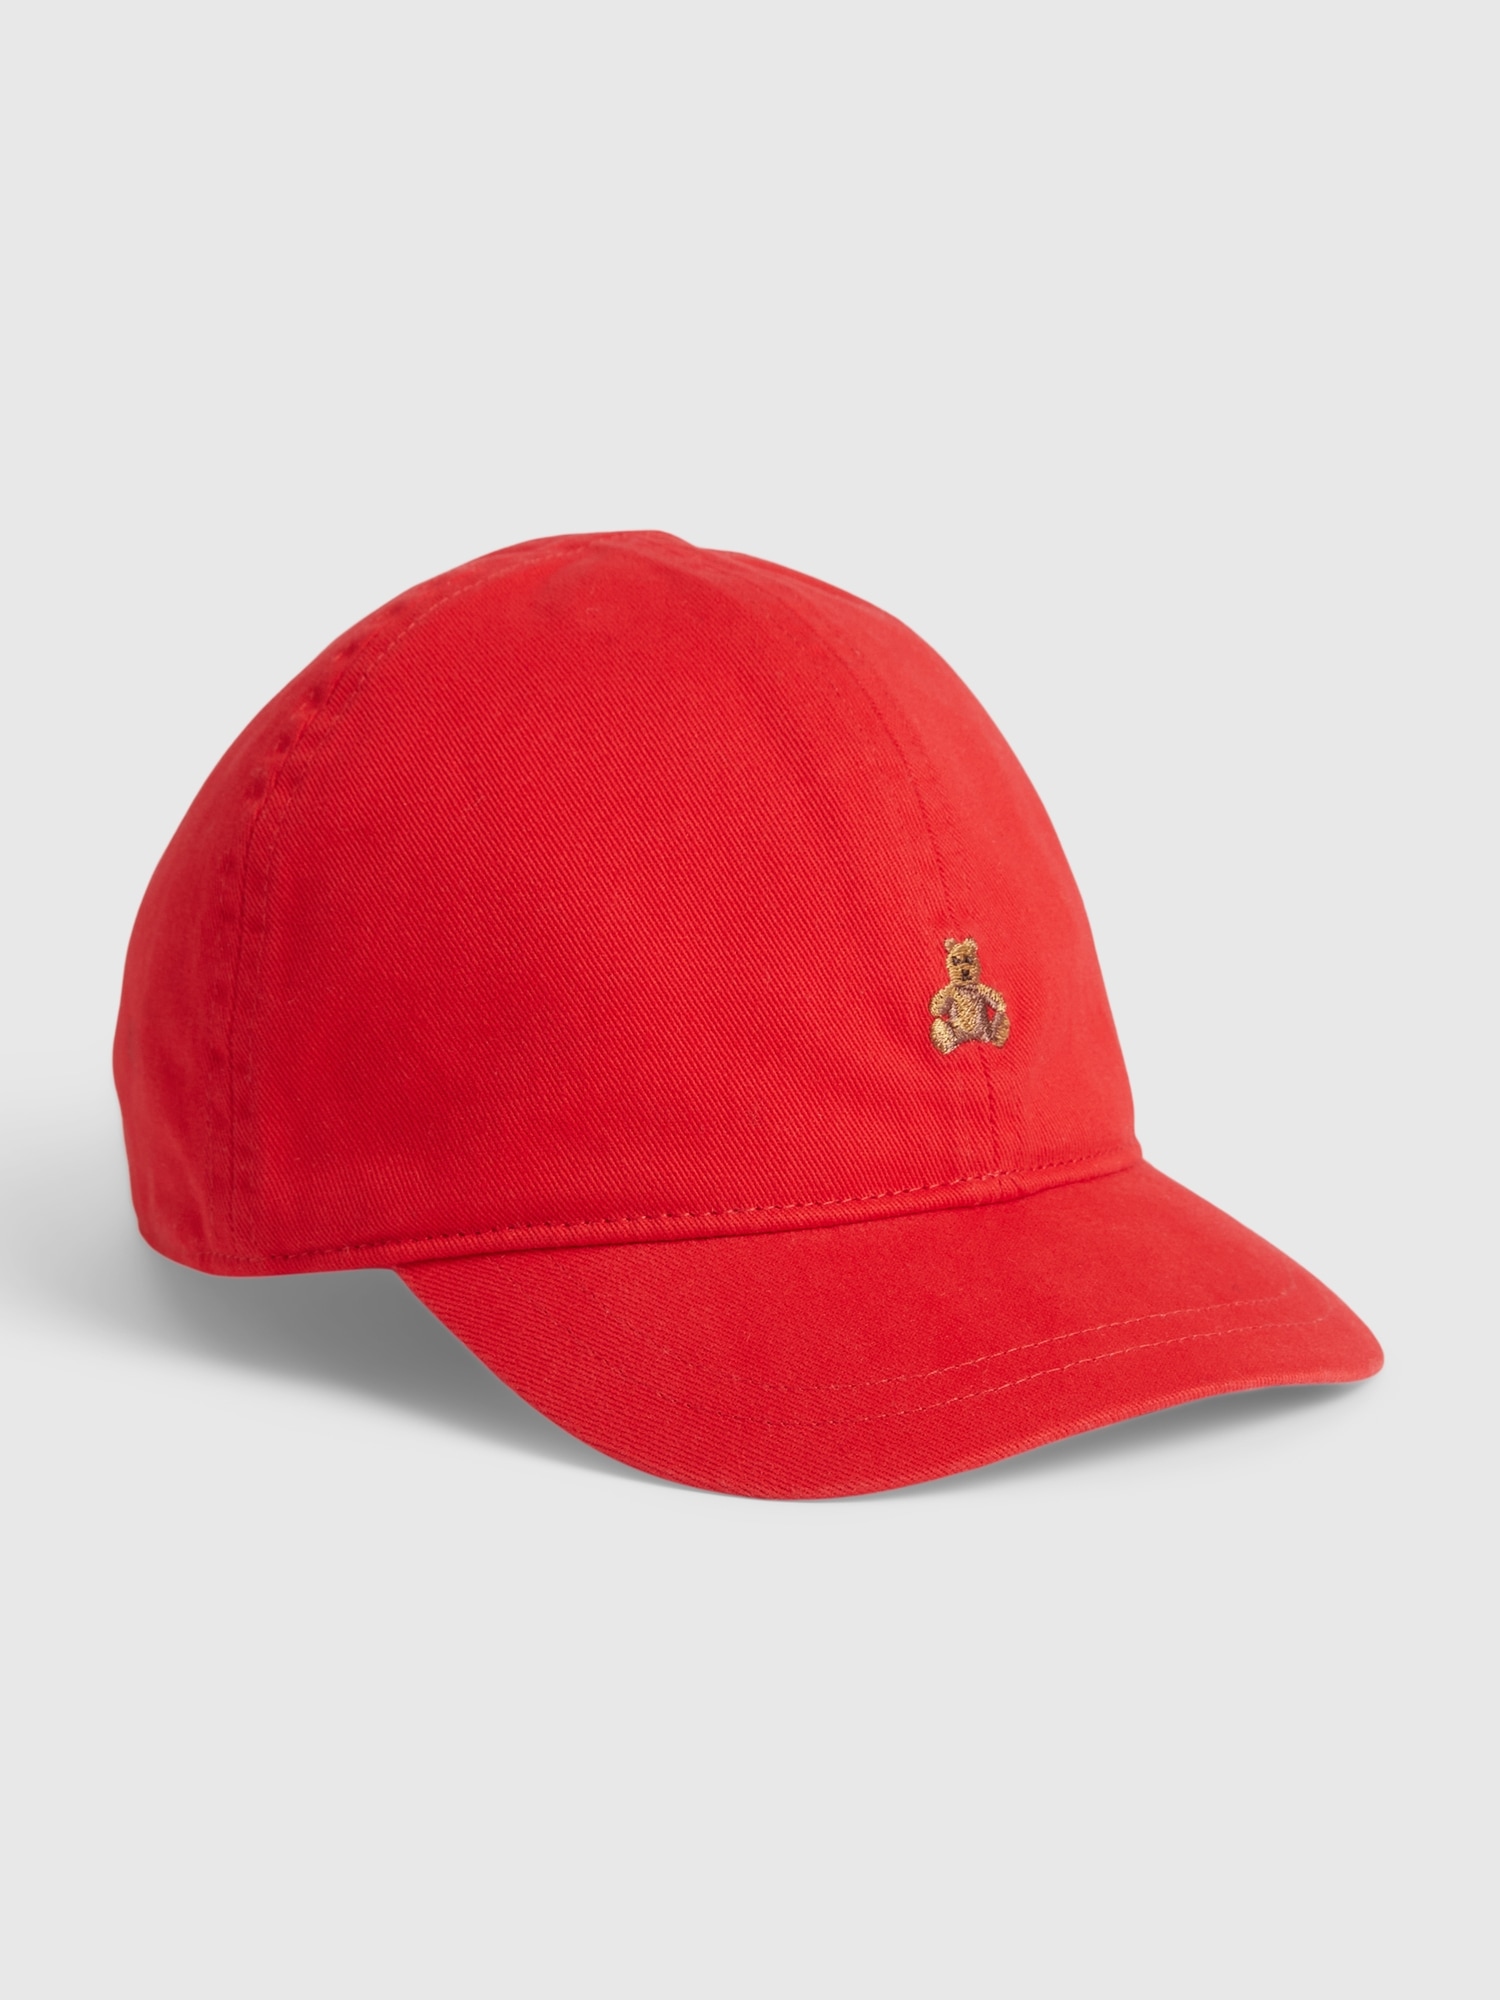 Gap Kids' Baby Baseball Hat In Tomato Red